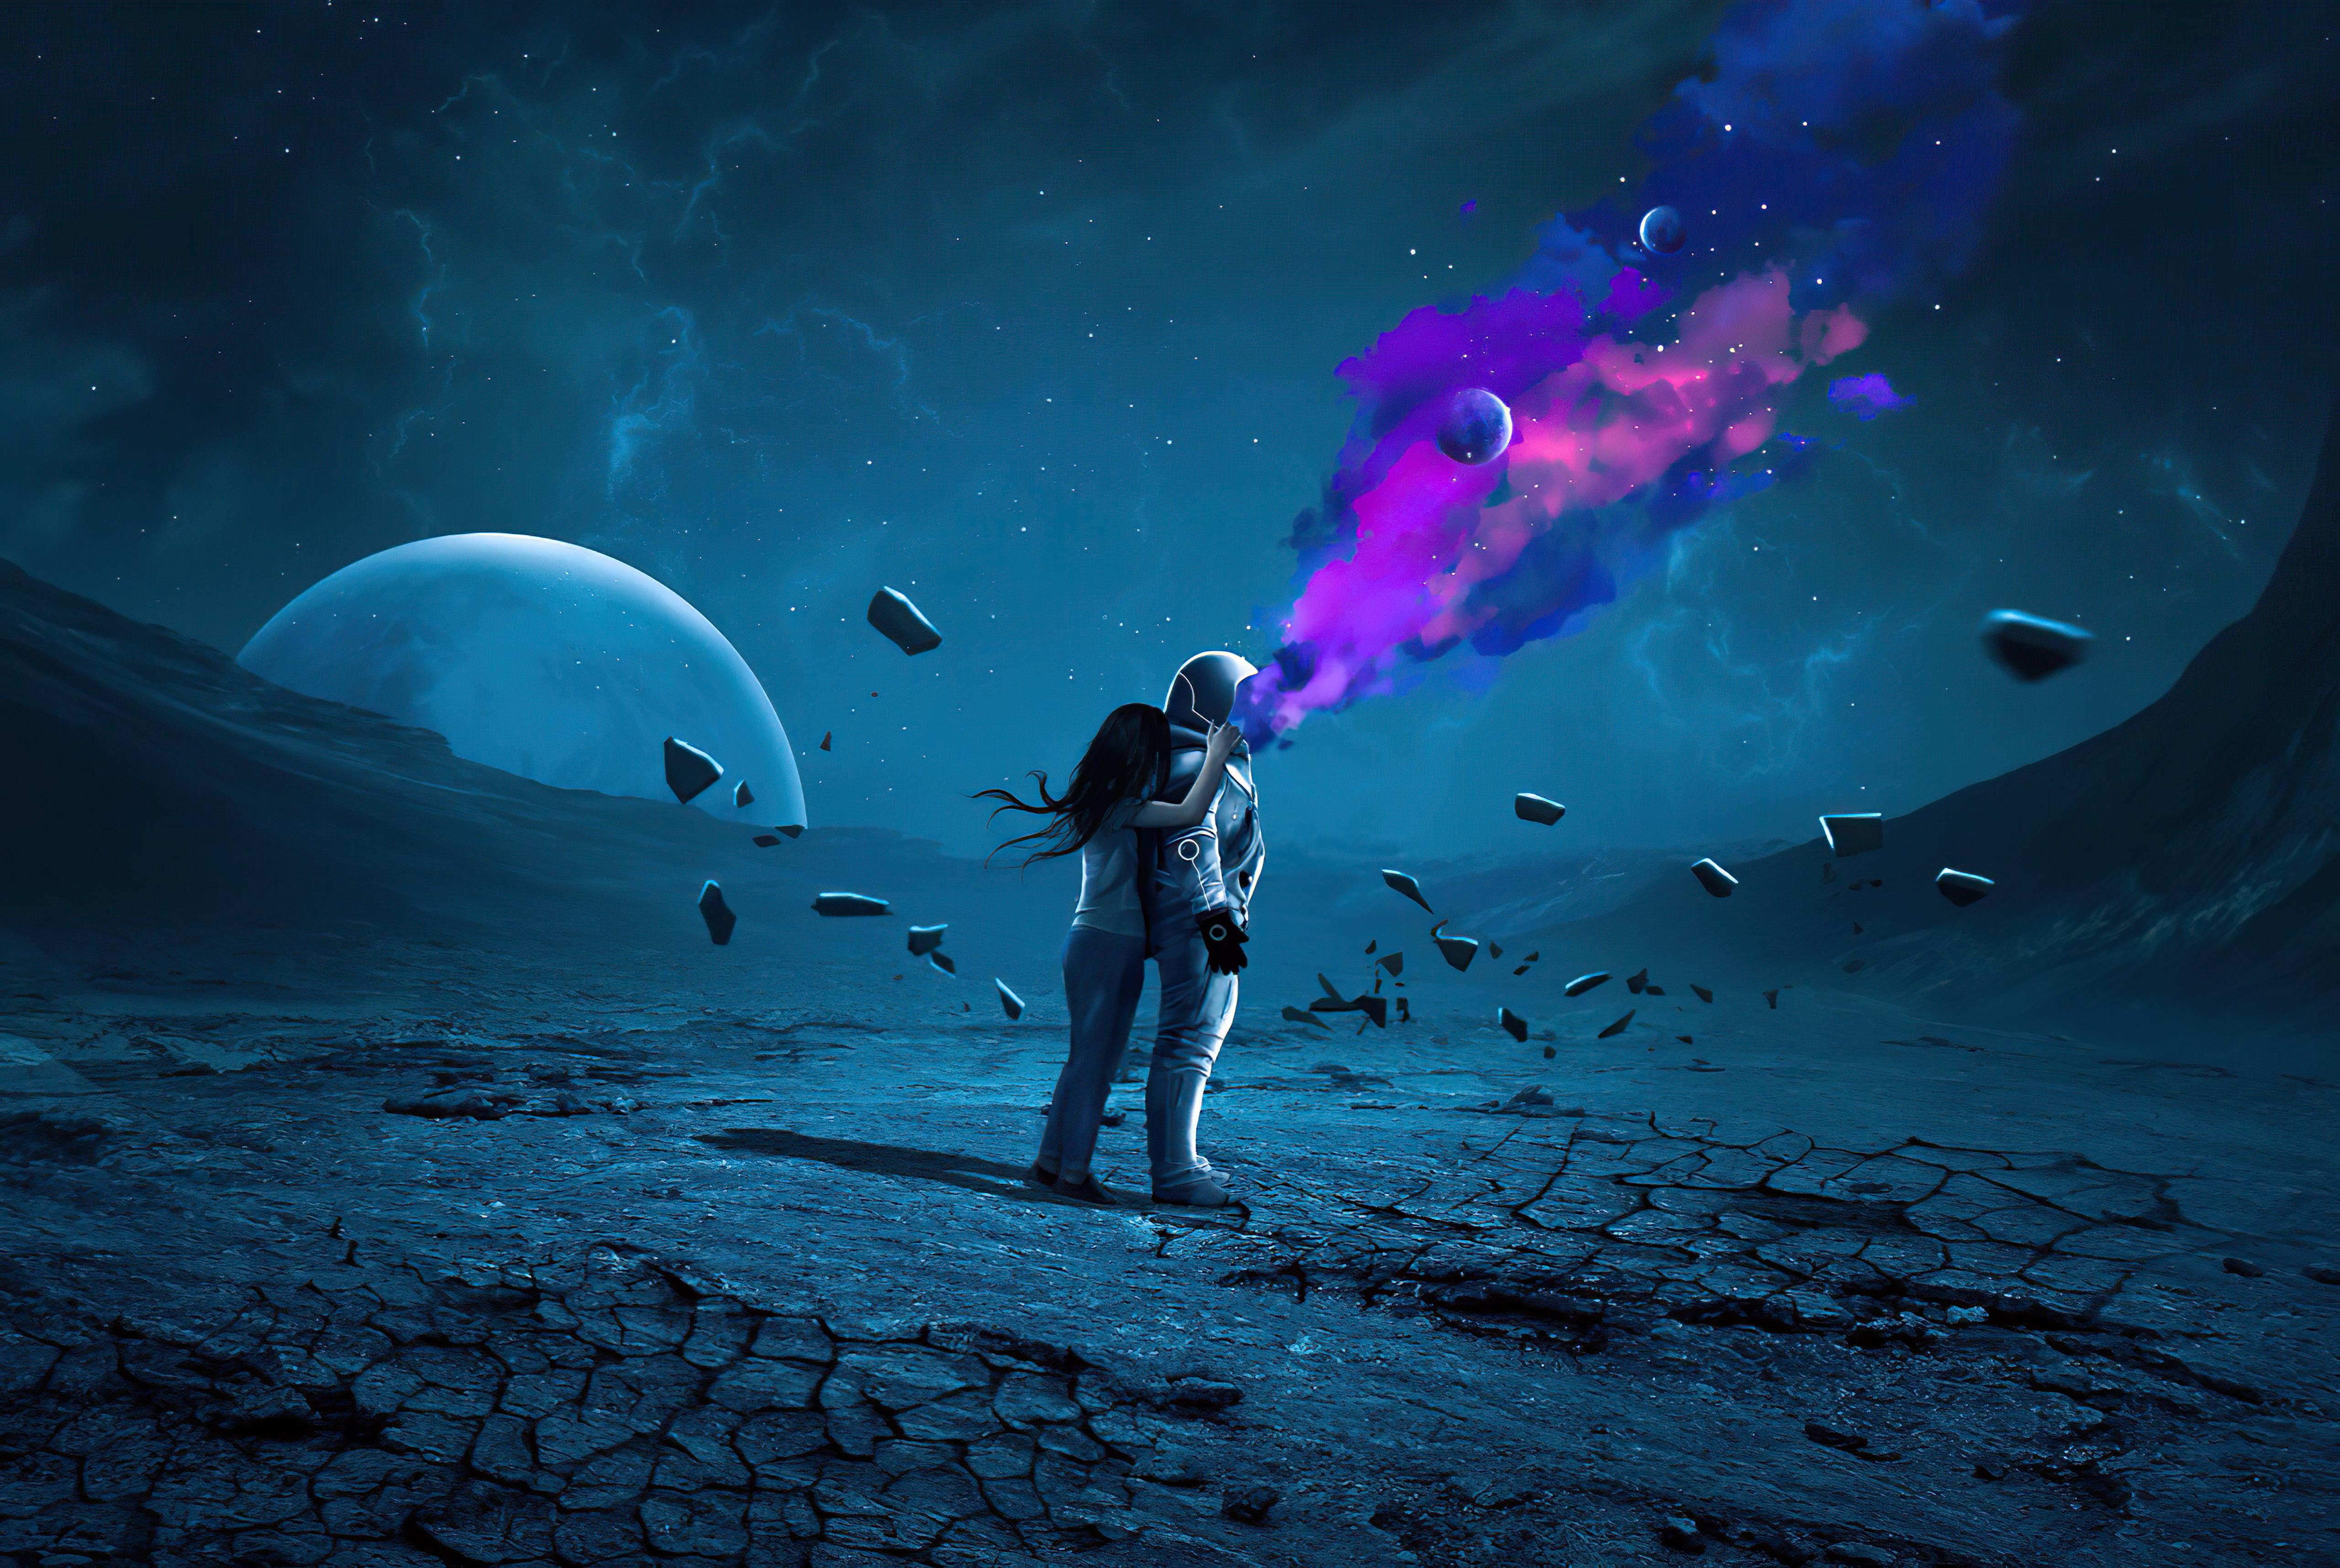 Sci Fi Astronaut 4k Ultra HD Wallpaper By Mohamedsaberartist